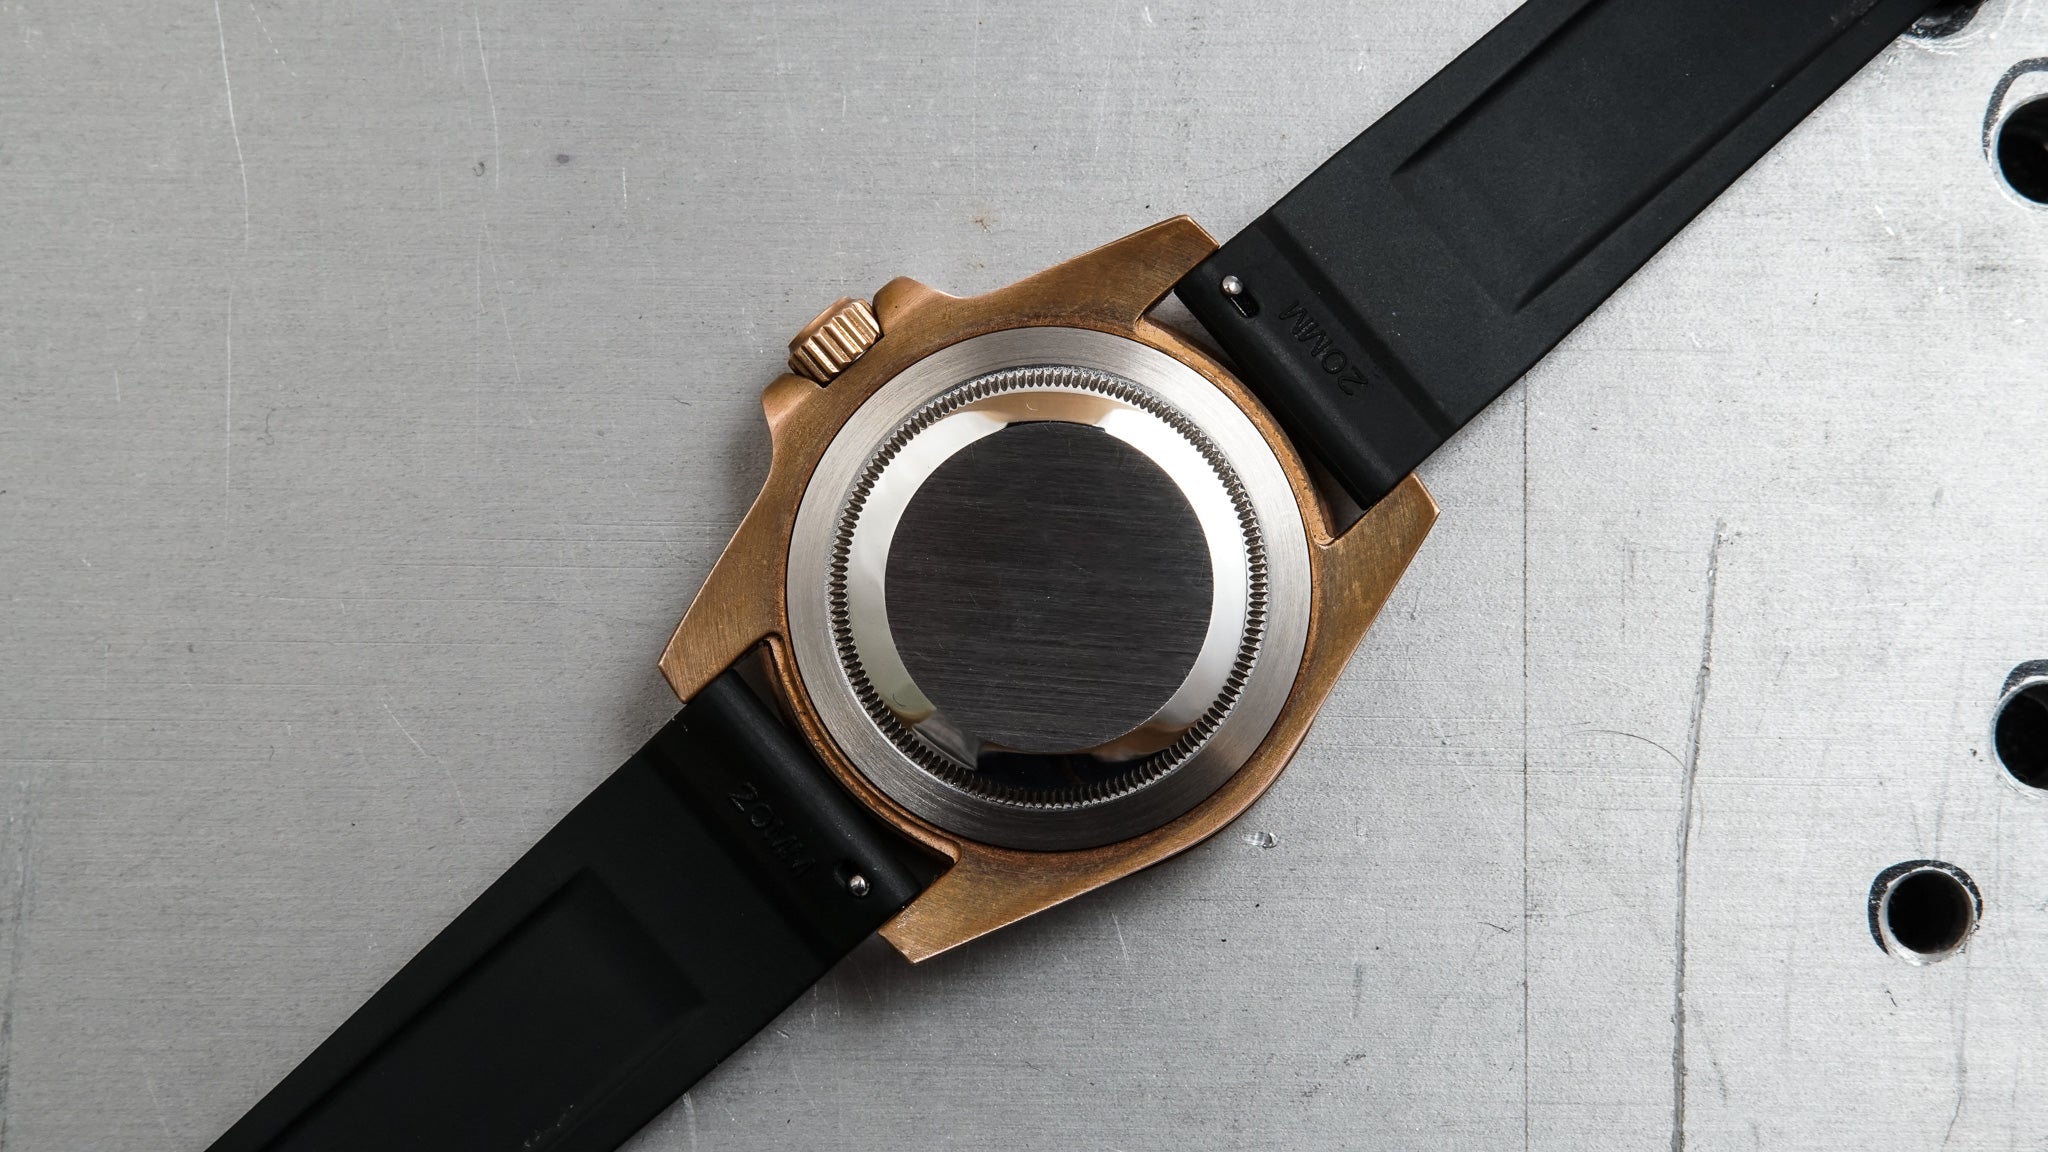 Watchmaking kit - Bronze Diver 2024 CuSn8 - Ref. 23112